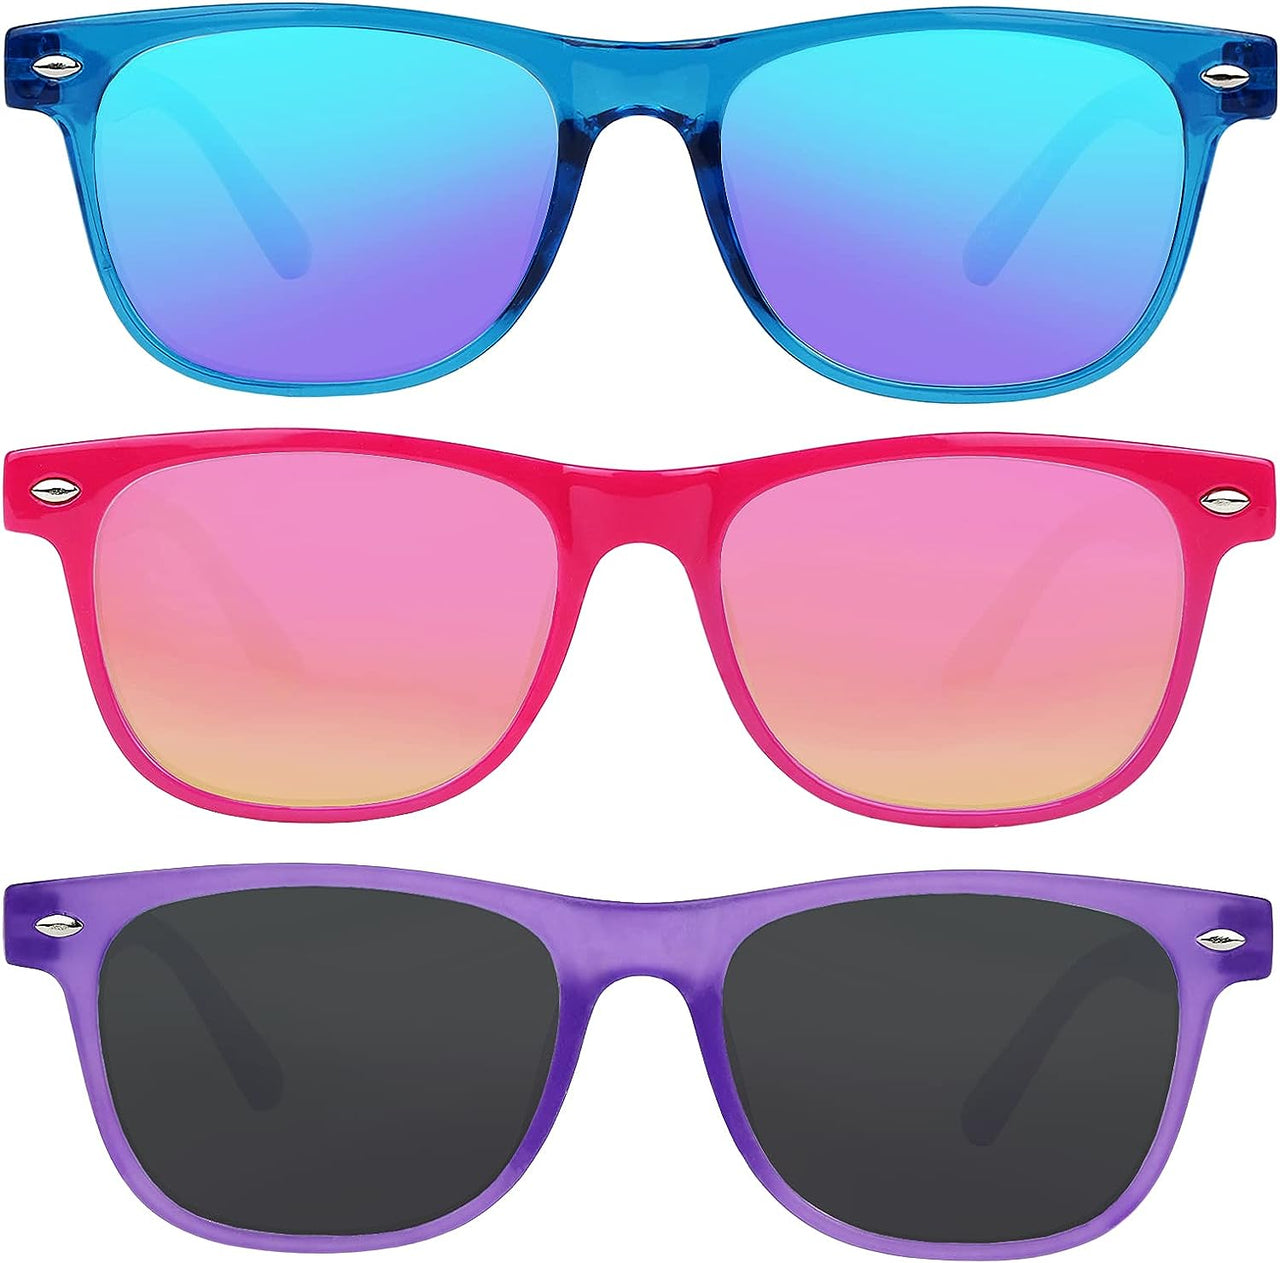 Yogo Vision Sunglasses For Boys & Girls Assortment